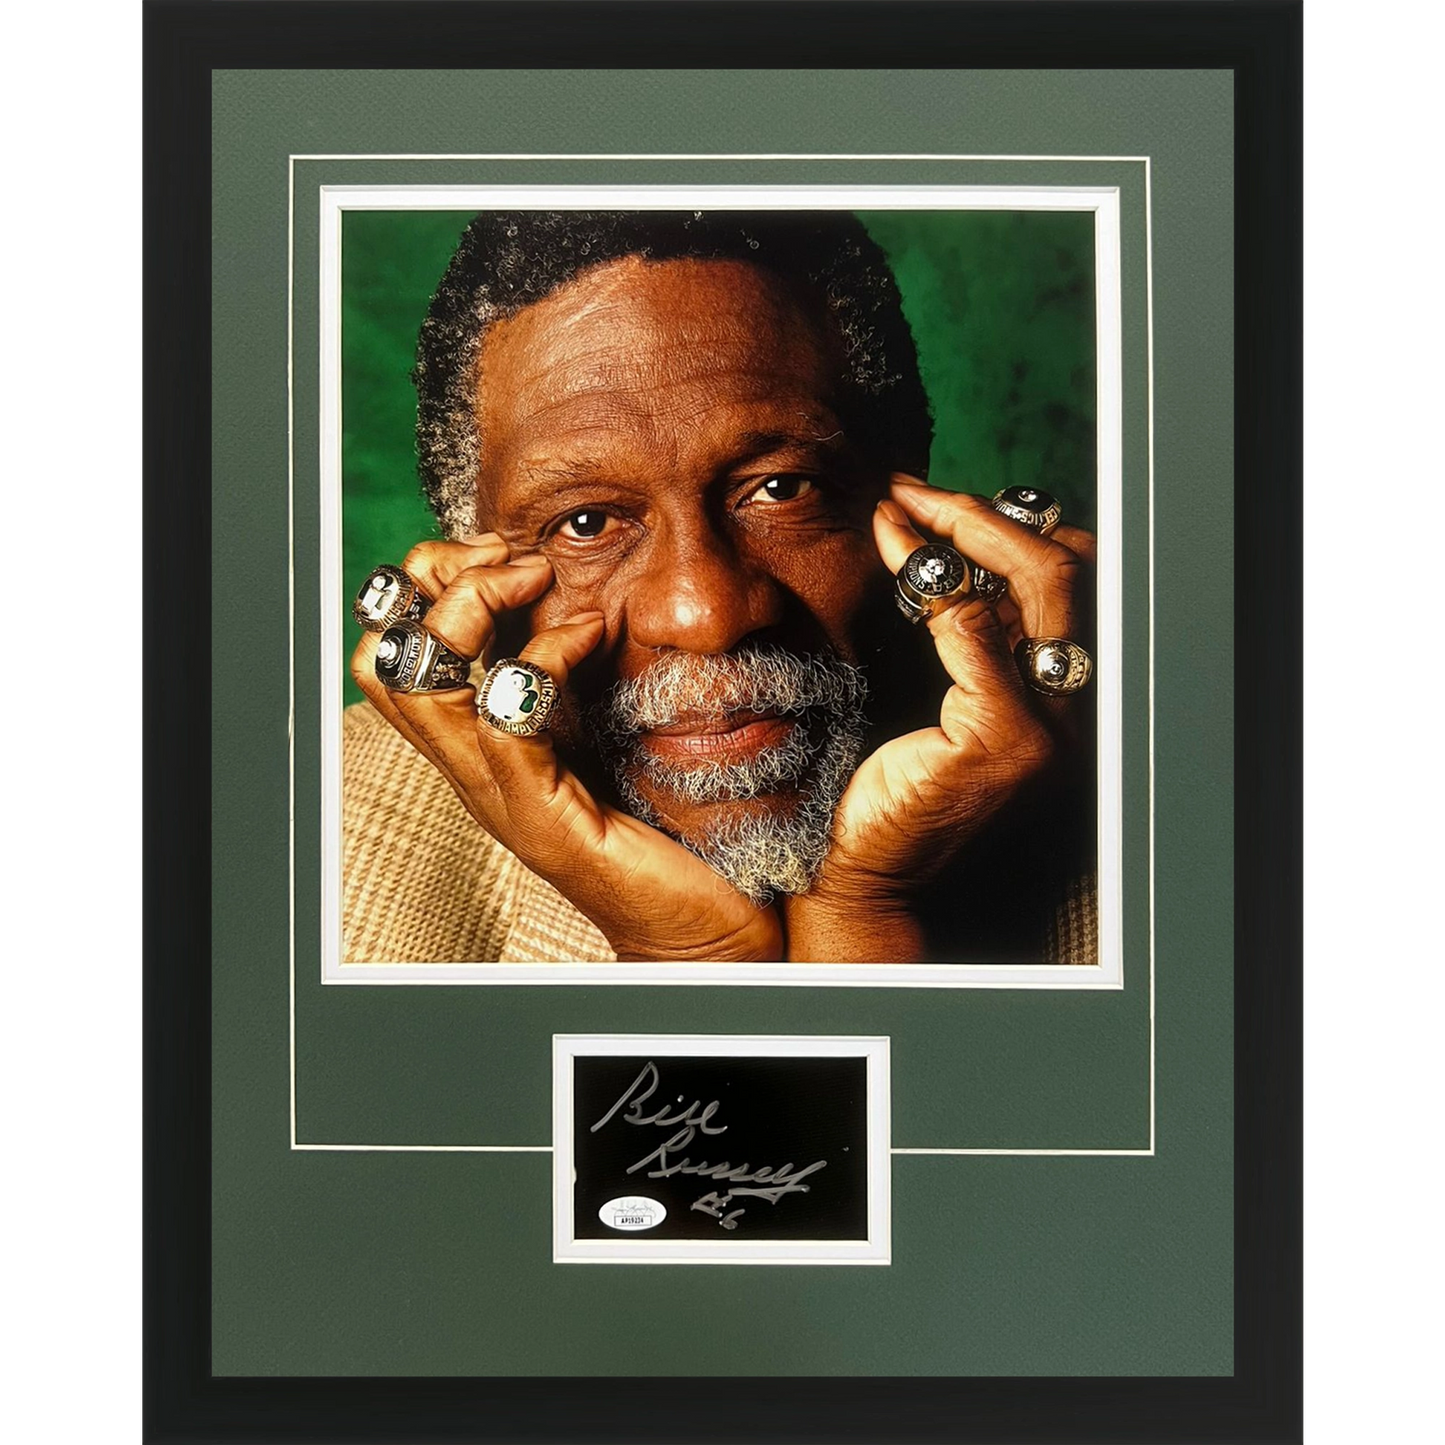 Bill Russell Autographed Boston Celtics (Rings) Deluxe Framed 12x12 Photo Piece - JSA